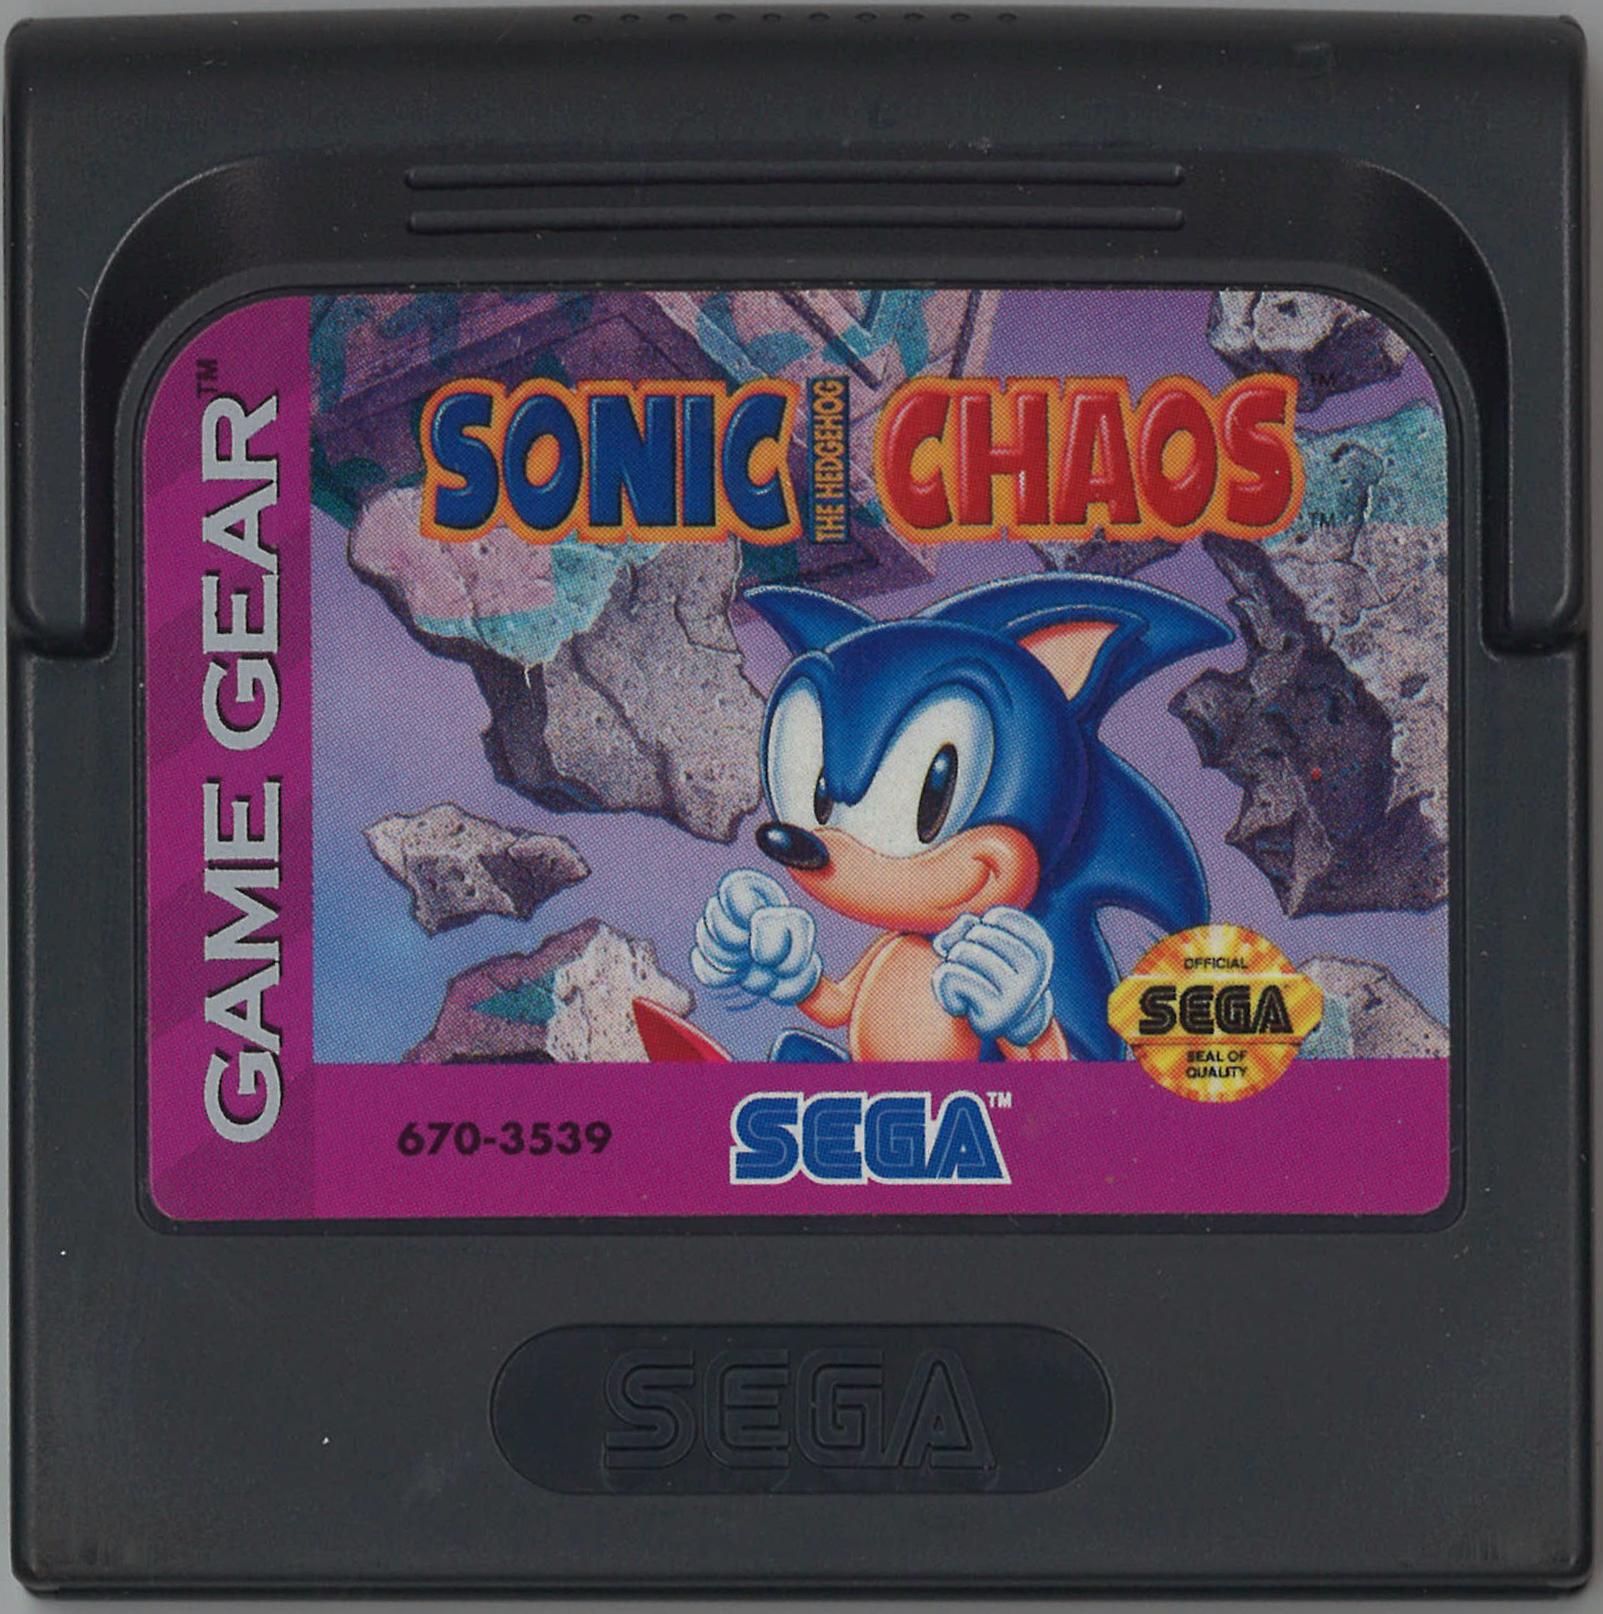 Sonic gear. Sonic CD Sega картридж. Игра Sonic the Hedgehog 2 / Sega game Gear. Game Gear Cartridge. Sonic Chaos game.